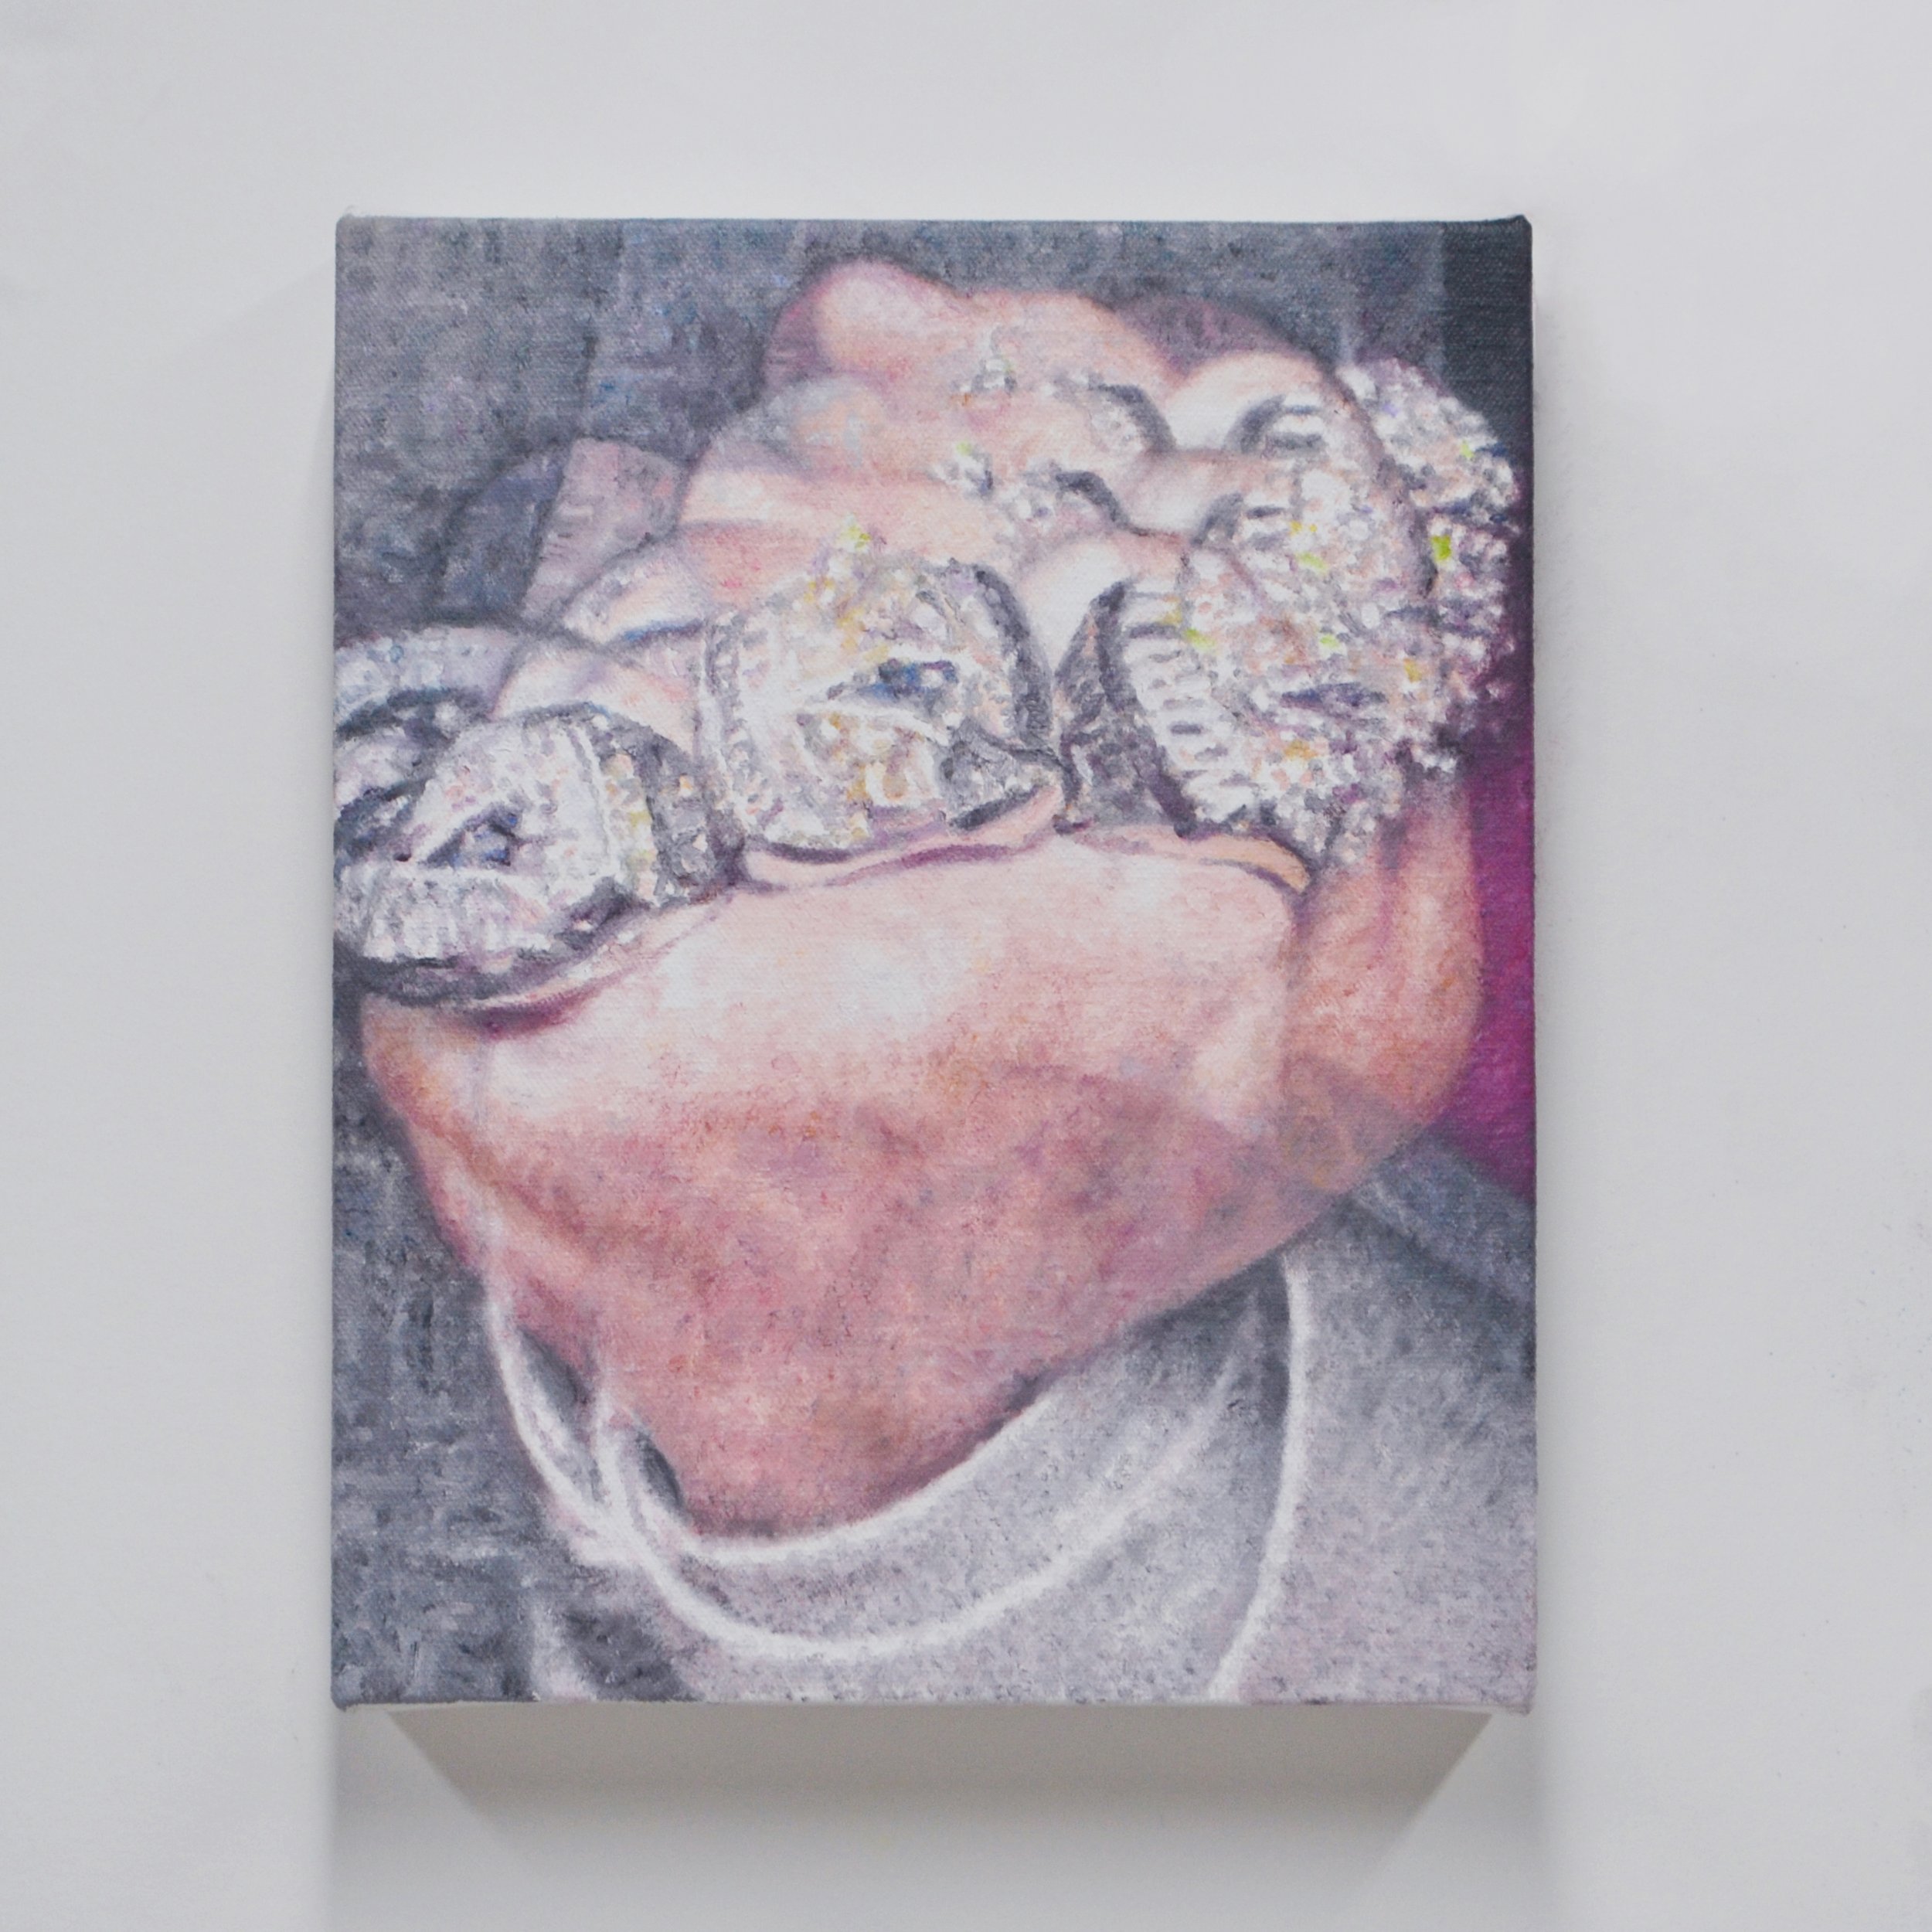  Evan Mazellan /  Handhold (After Mainz)  / Oil on canvas / 10 x 8 inches 